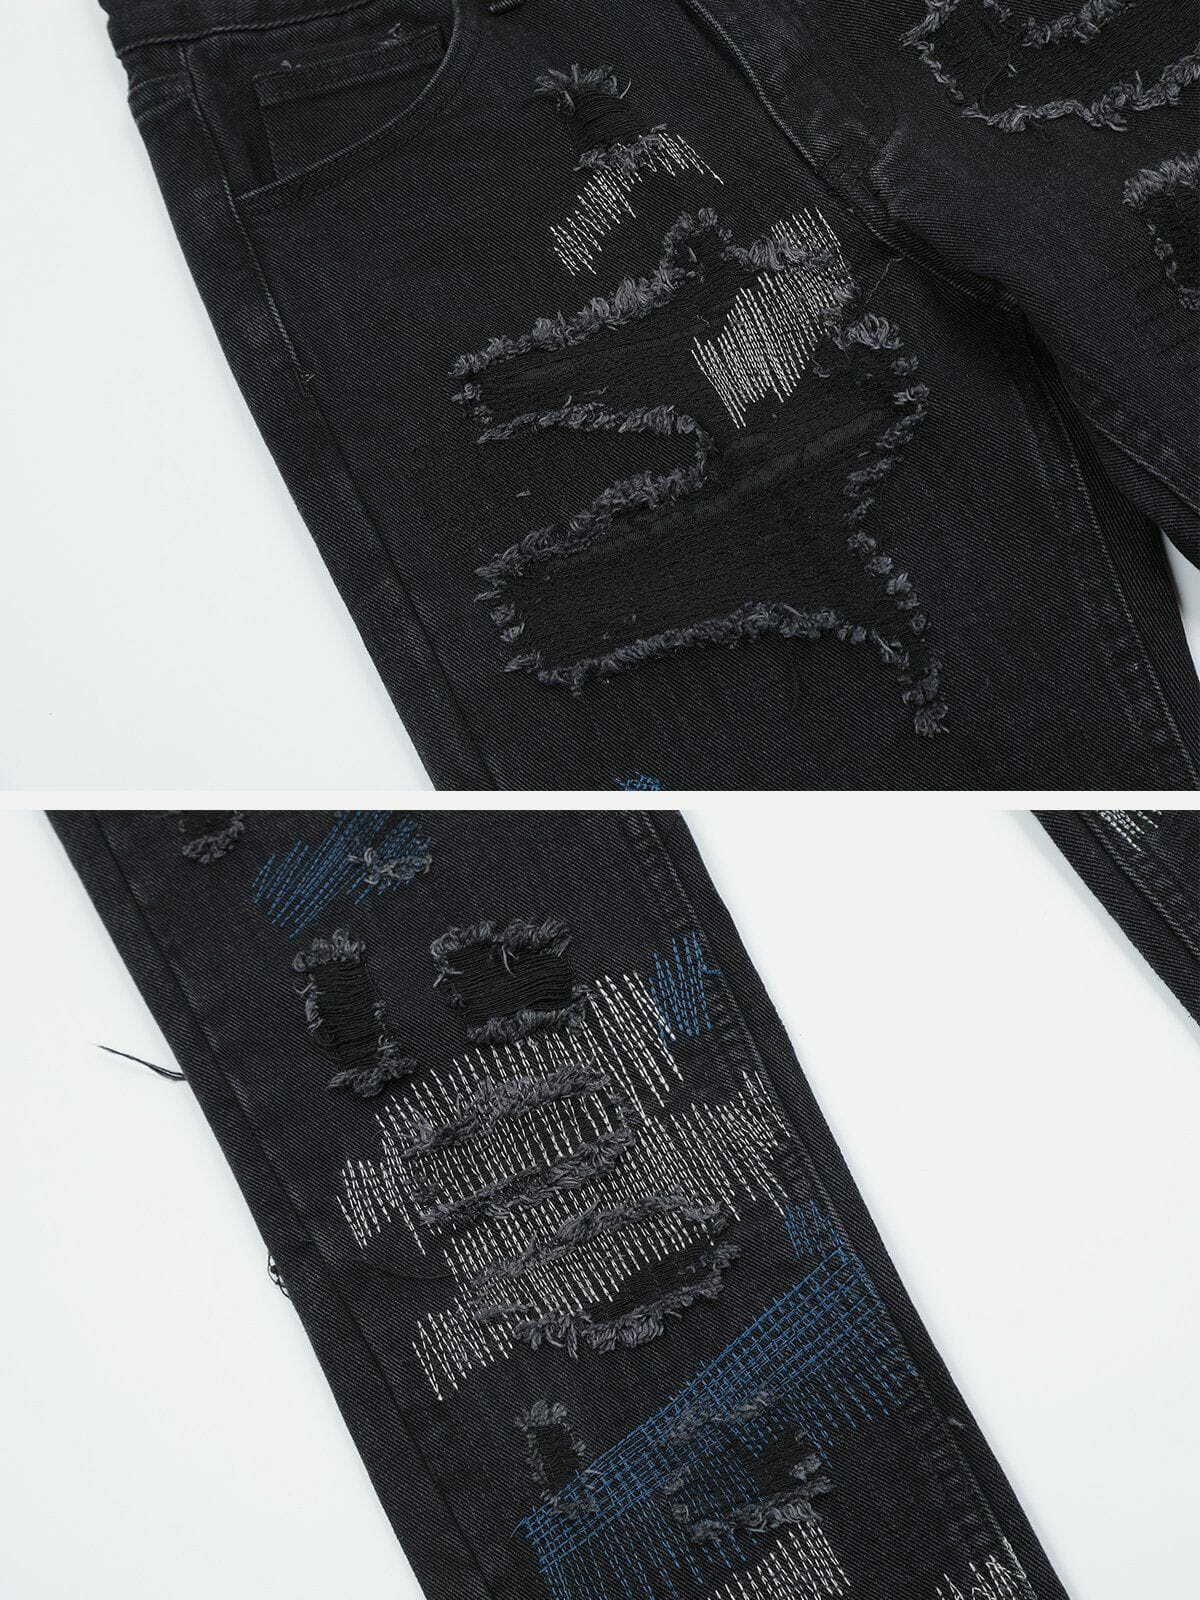 revolutionary patchwork embroidered jeans edgy & irregular design 1816